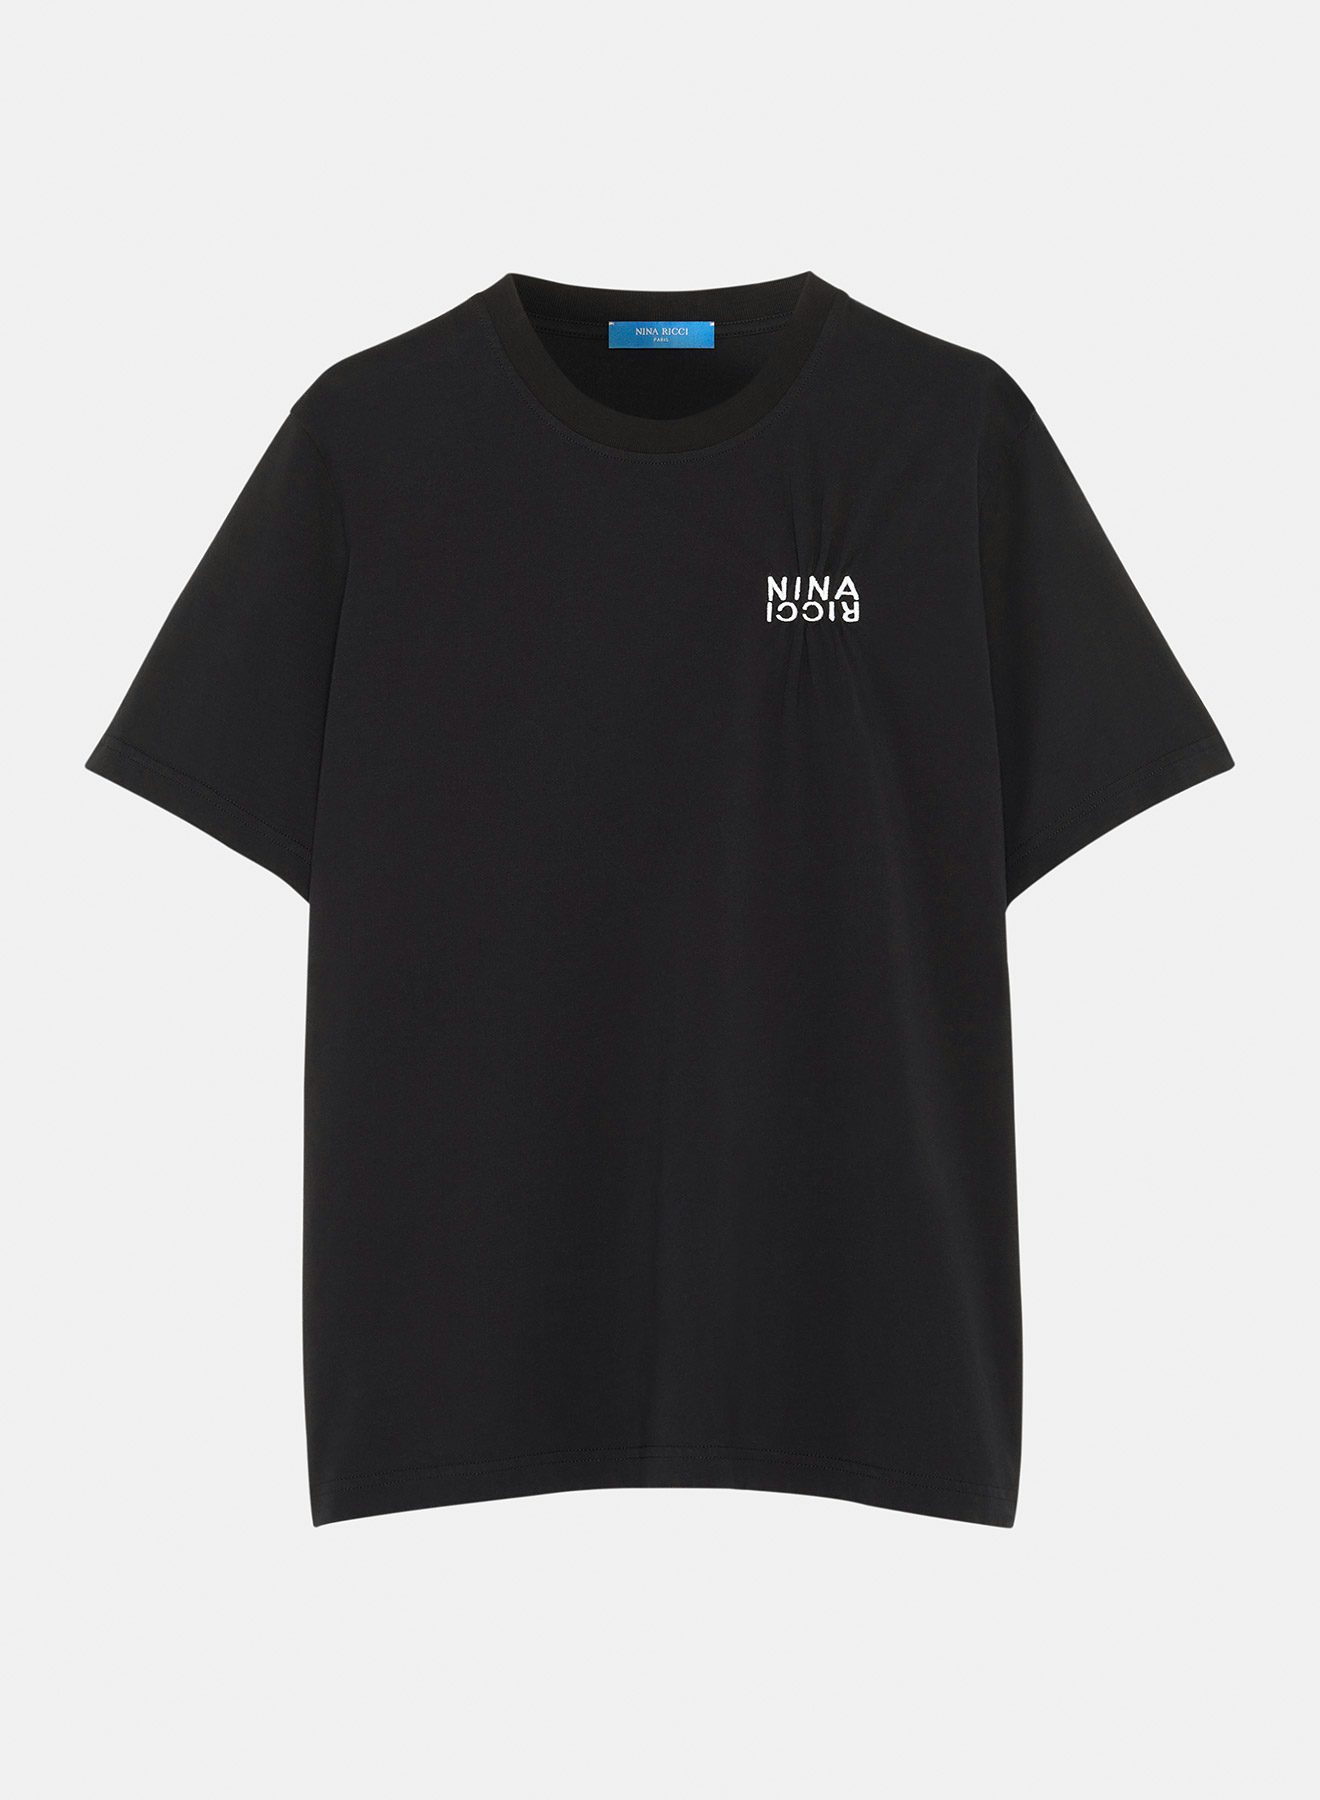 Cotton jersey t-shirt black - Nina Ricci